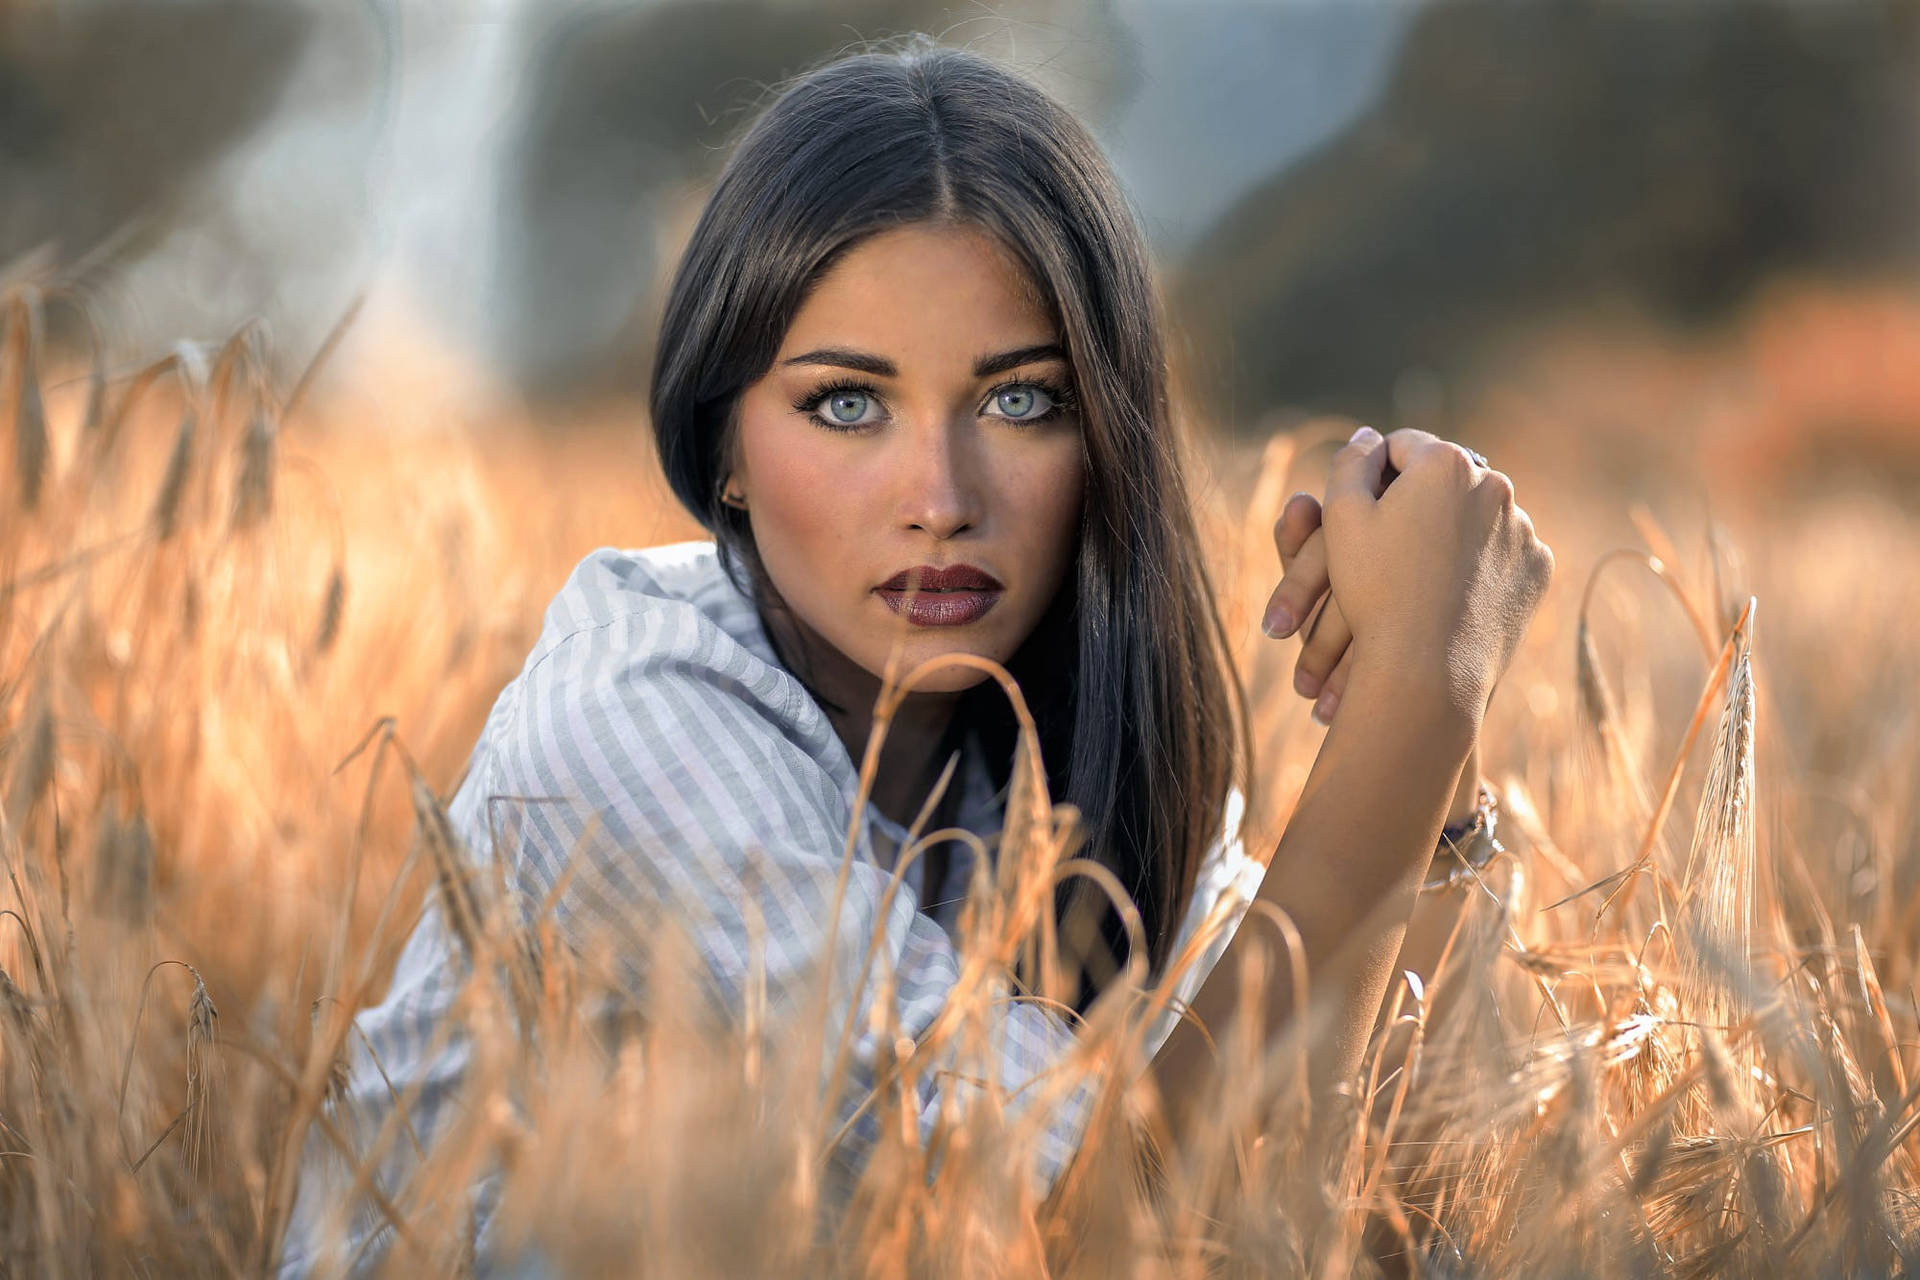 Woman With Blue Eyes In Wheat Field Wallpaper